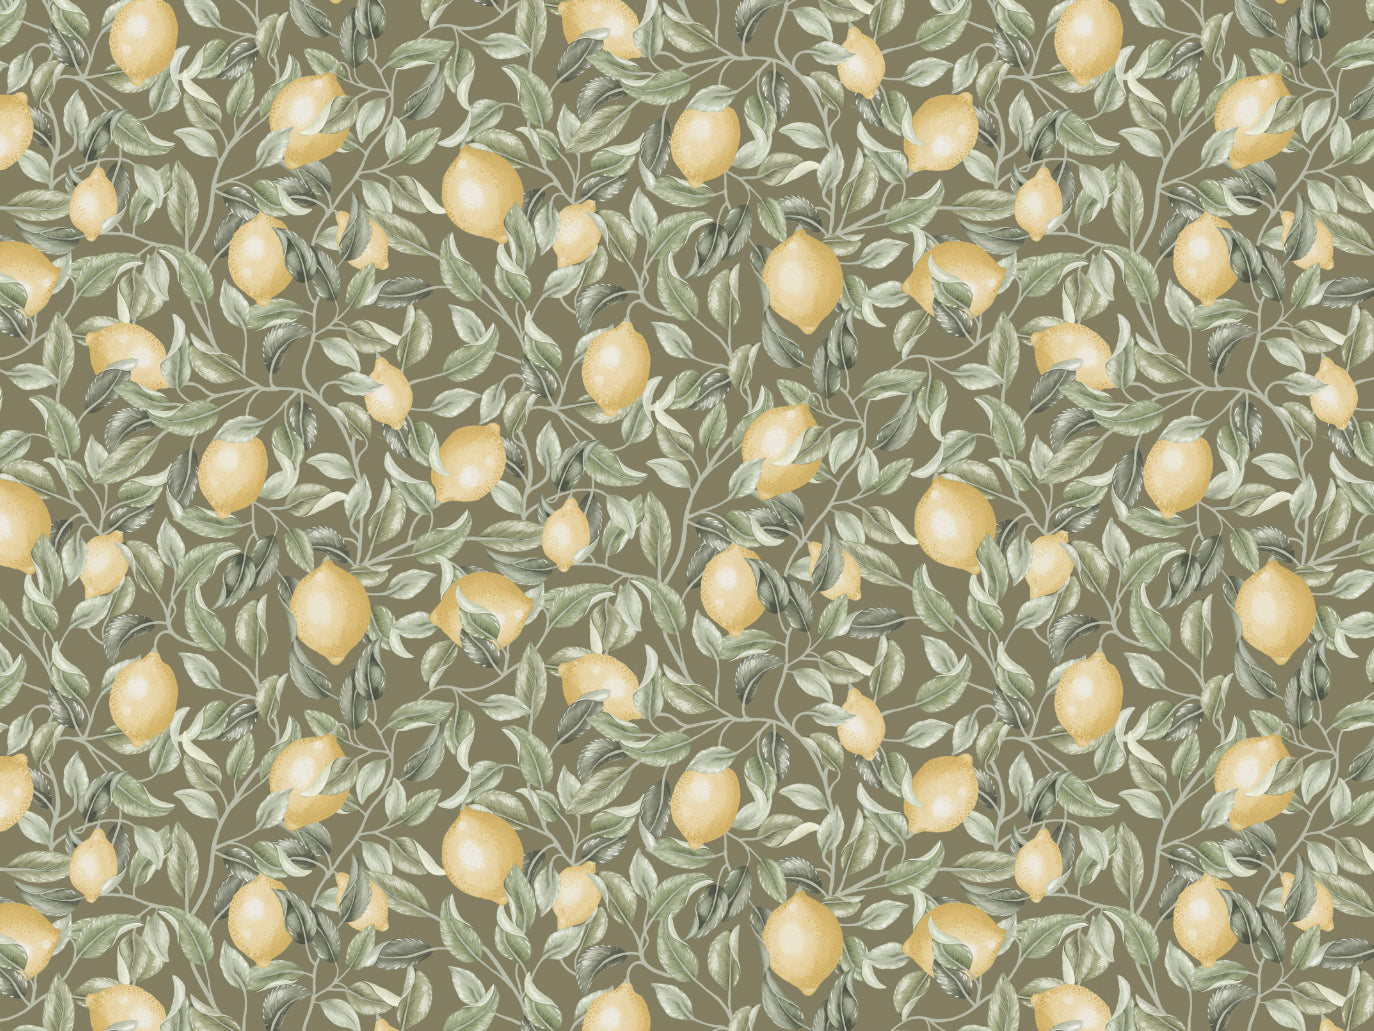 Summer Gray Wallpaper - Lemon Trees - Sage Green